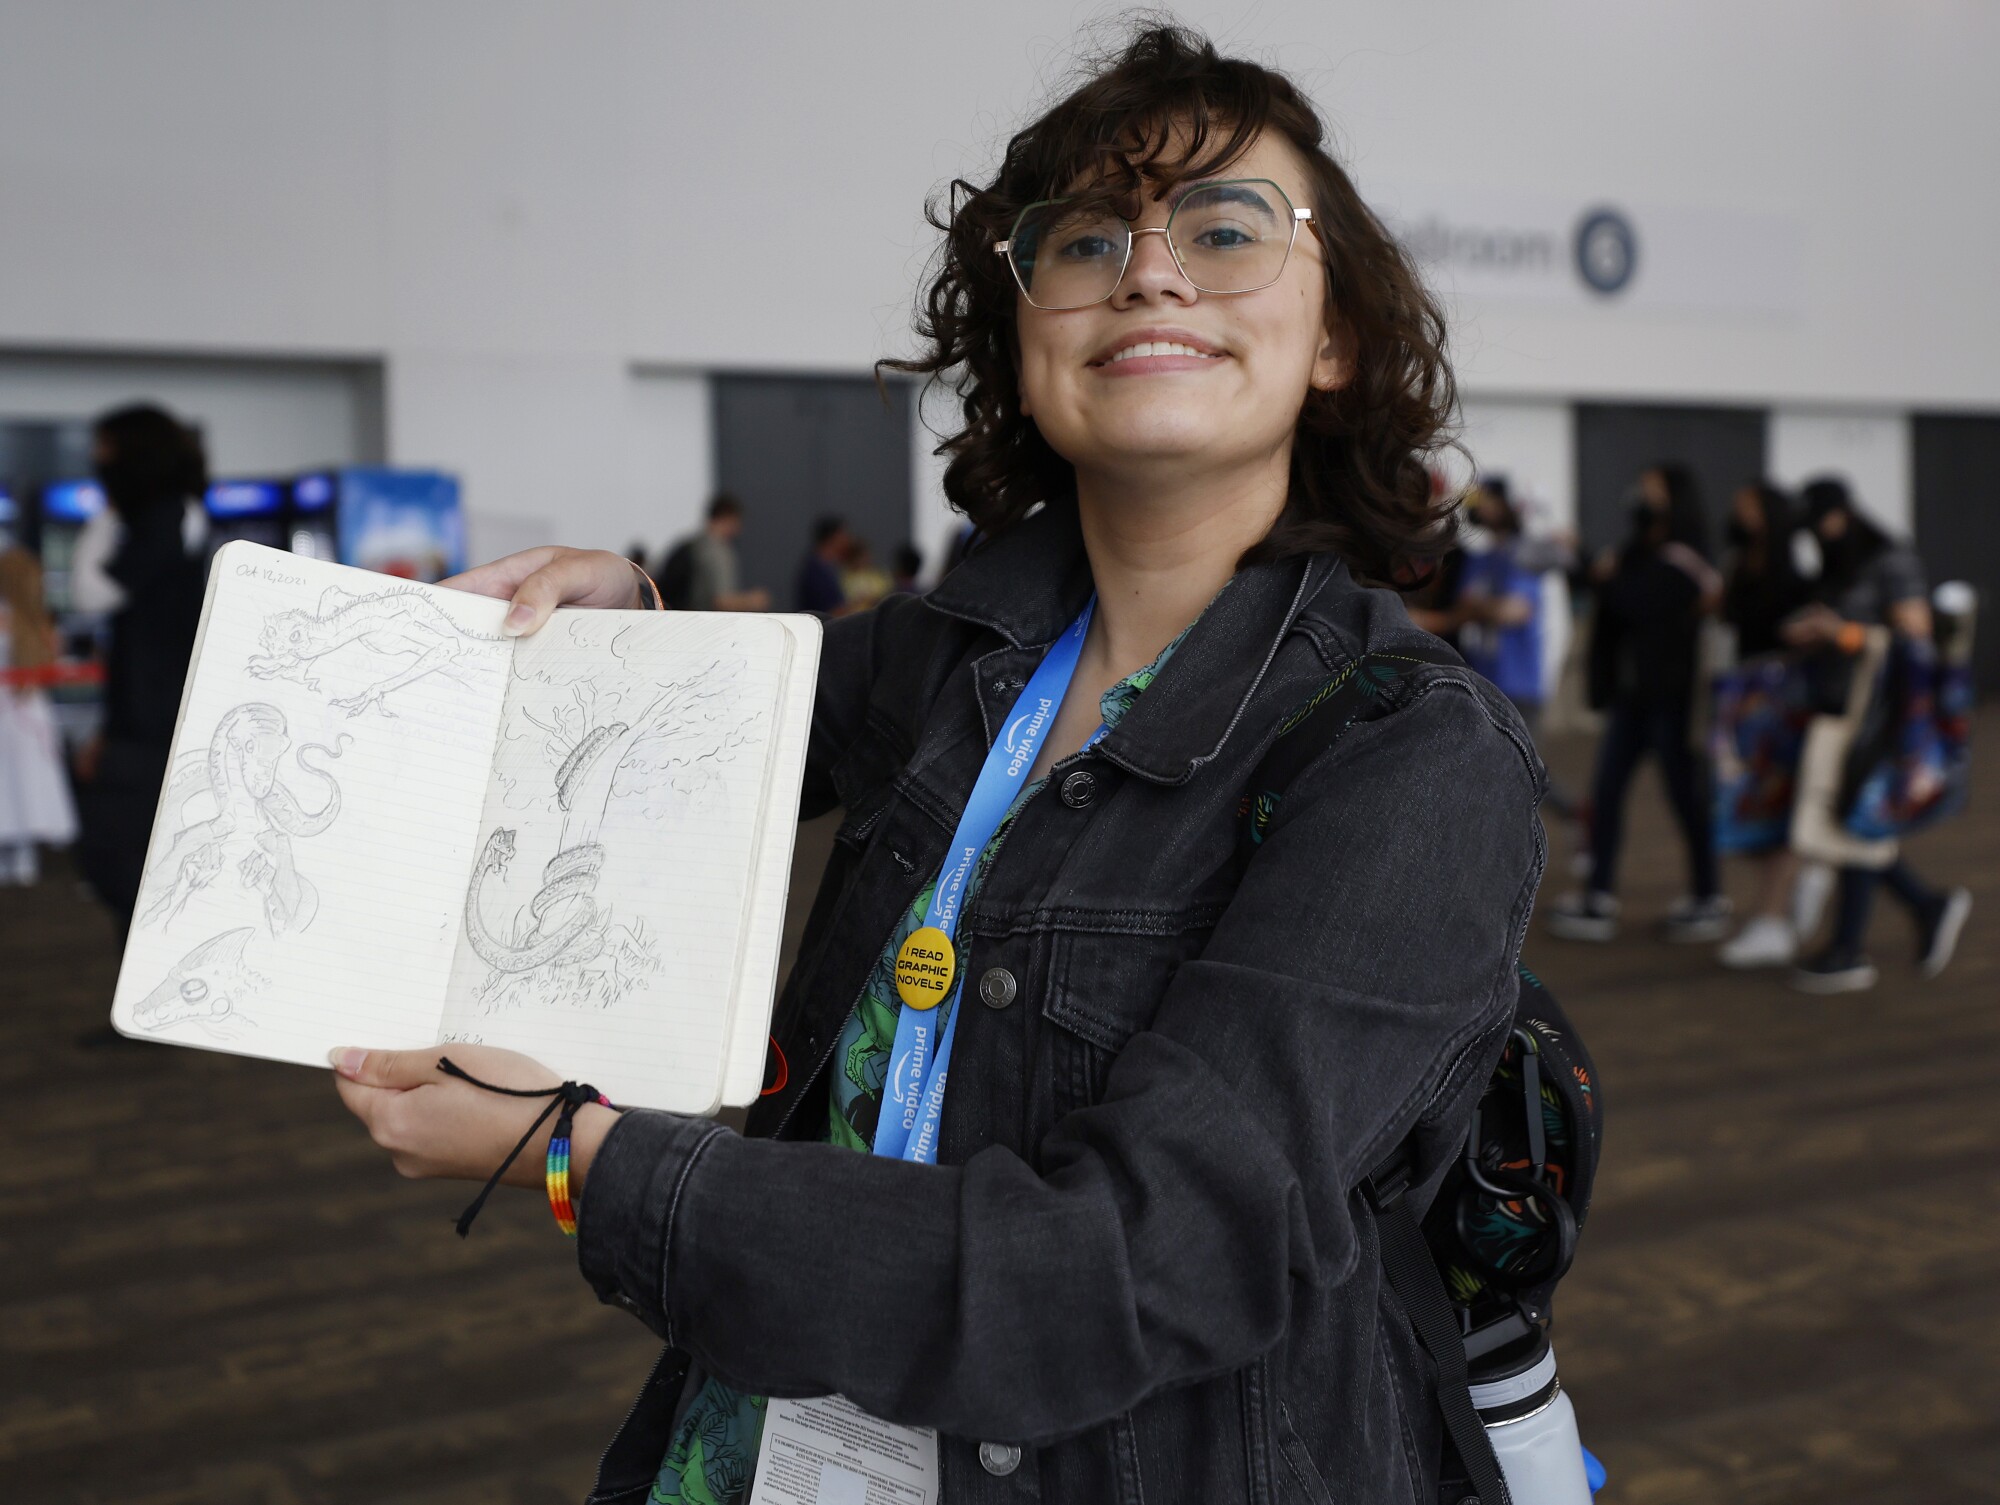 Isidro Valdez Palmer, 18, of Carlsbad, was among the students at the week-long camp at Little Fish Comic Book Studio